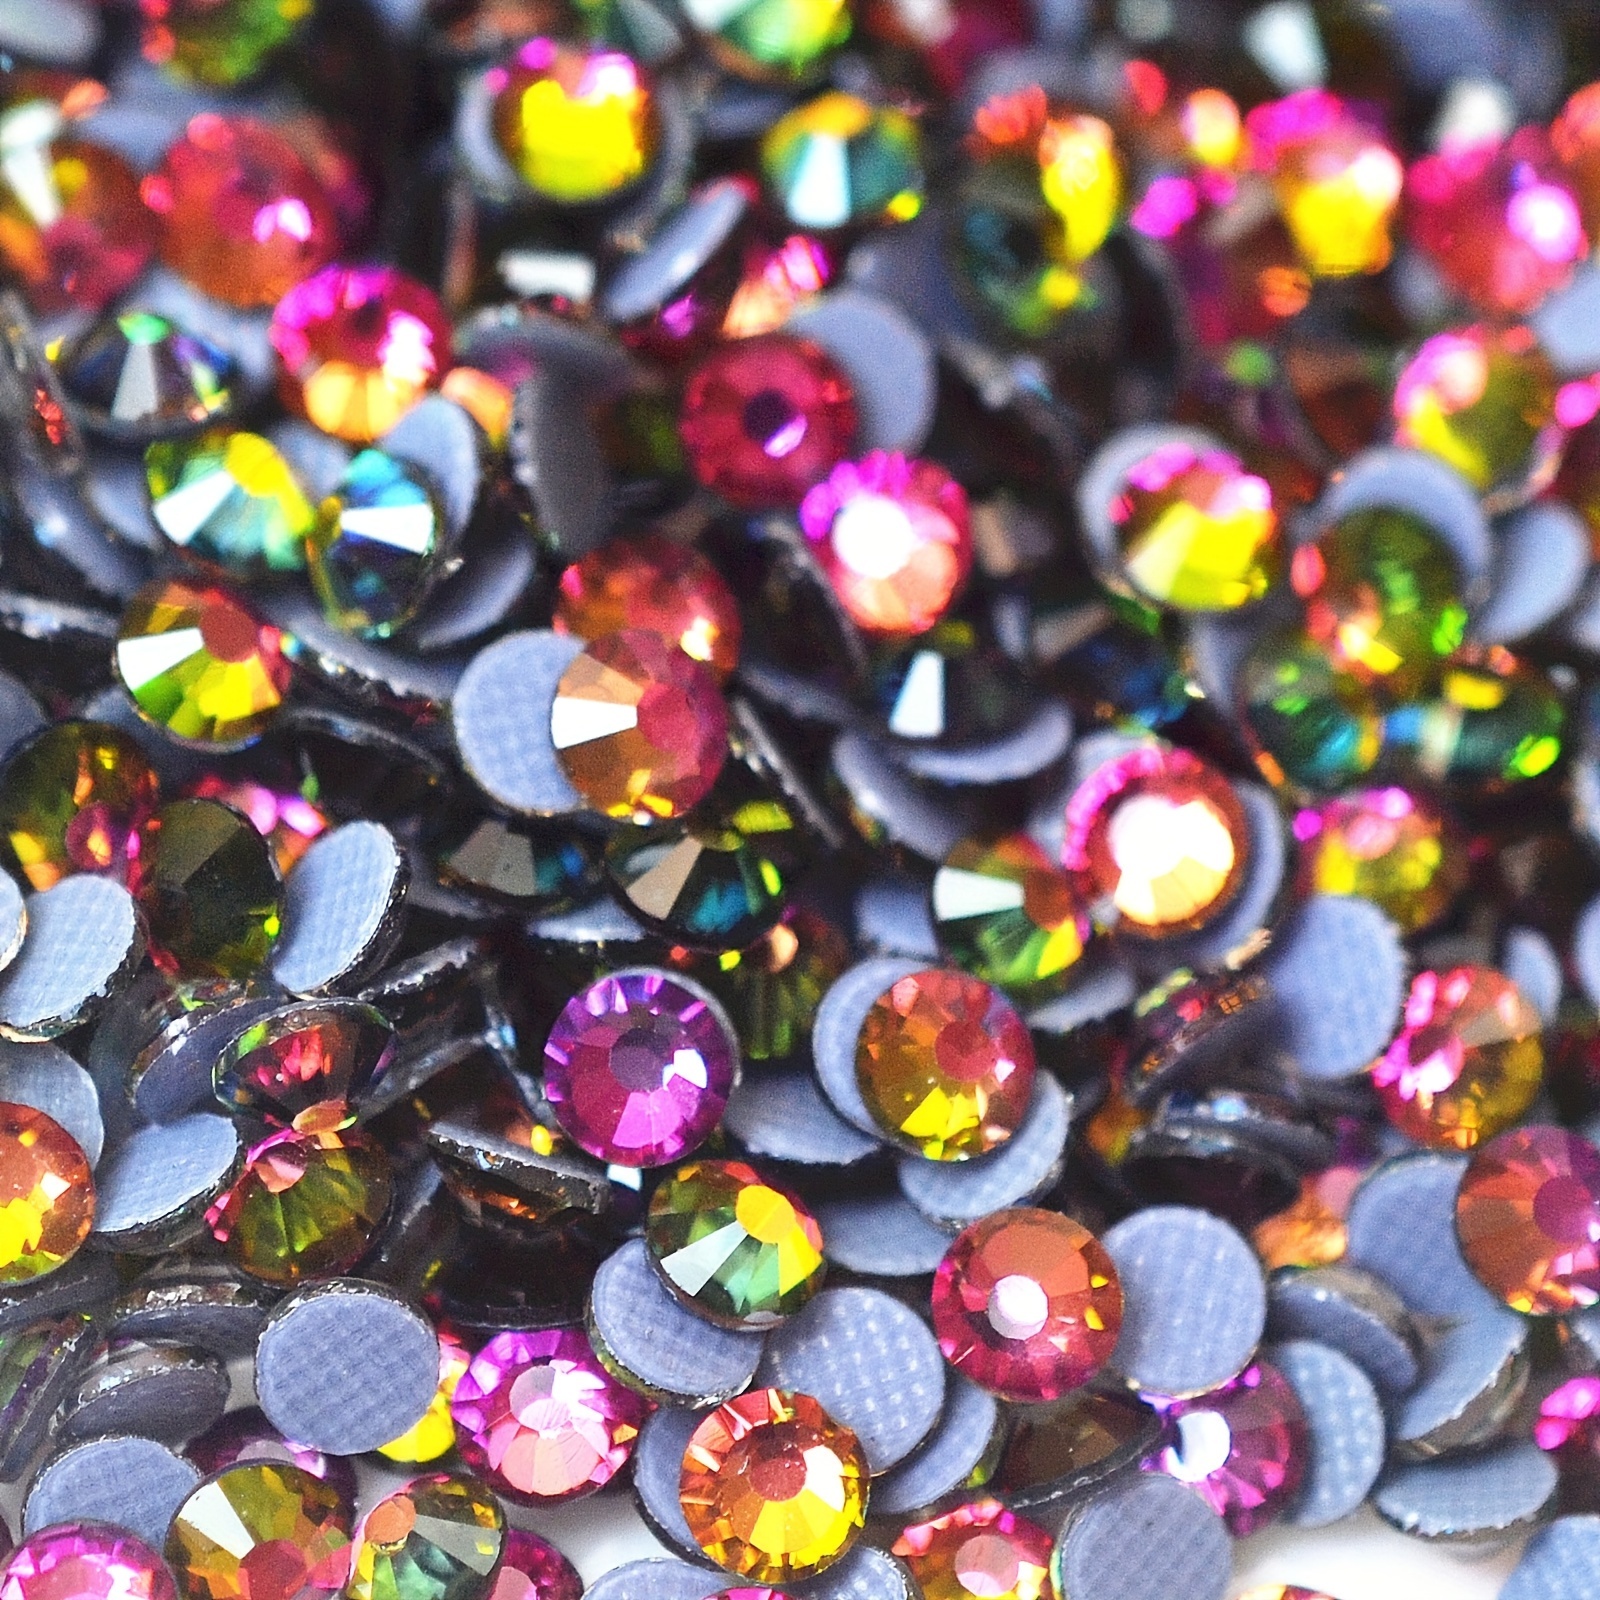 1440pcs Hot-Fix Iron-On Flat-Back Beads Rhinestones Rainbow Colorful SS16  4mm